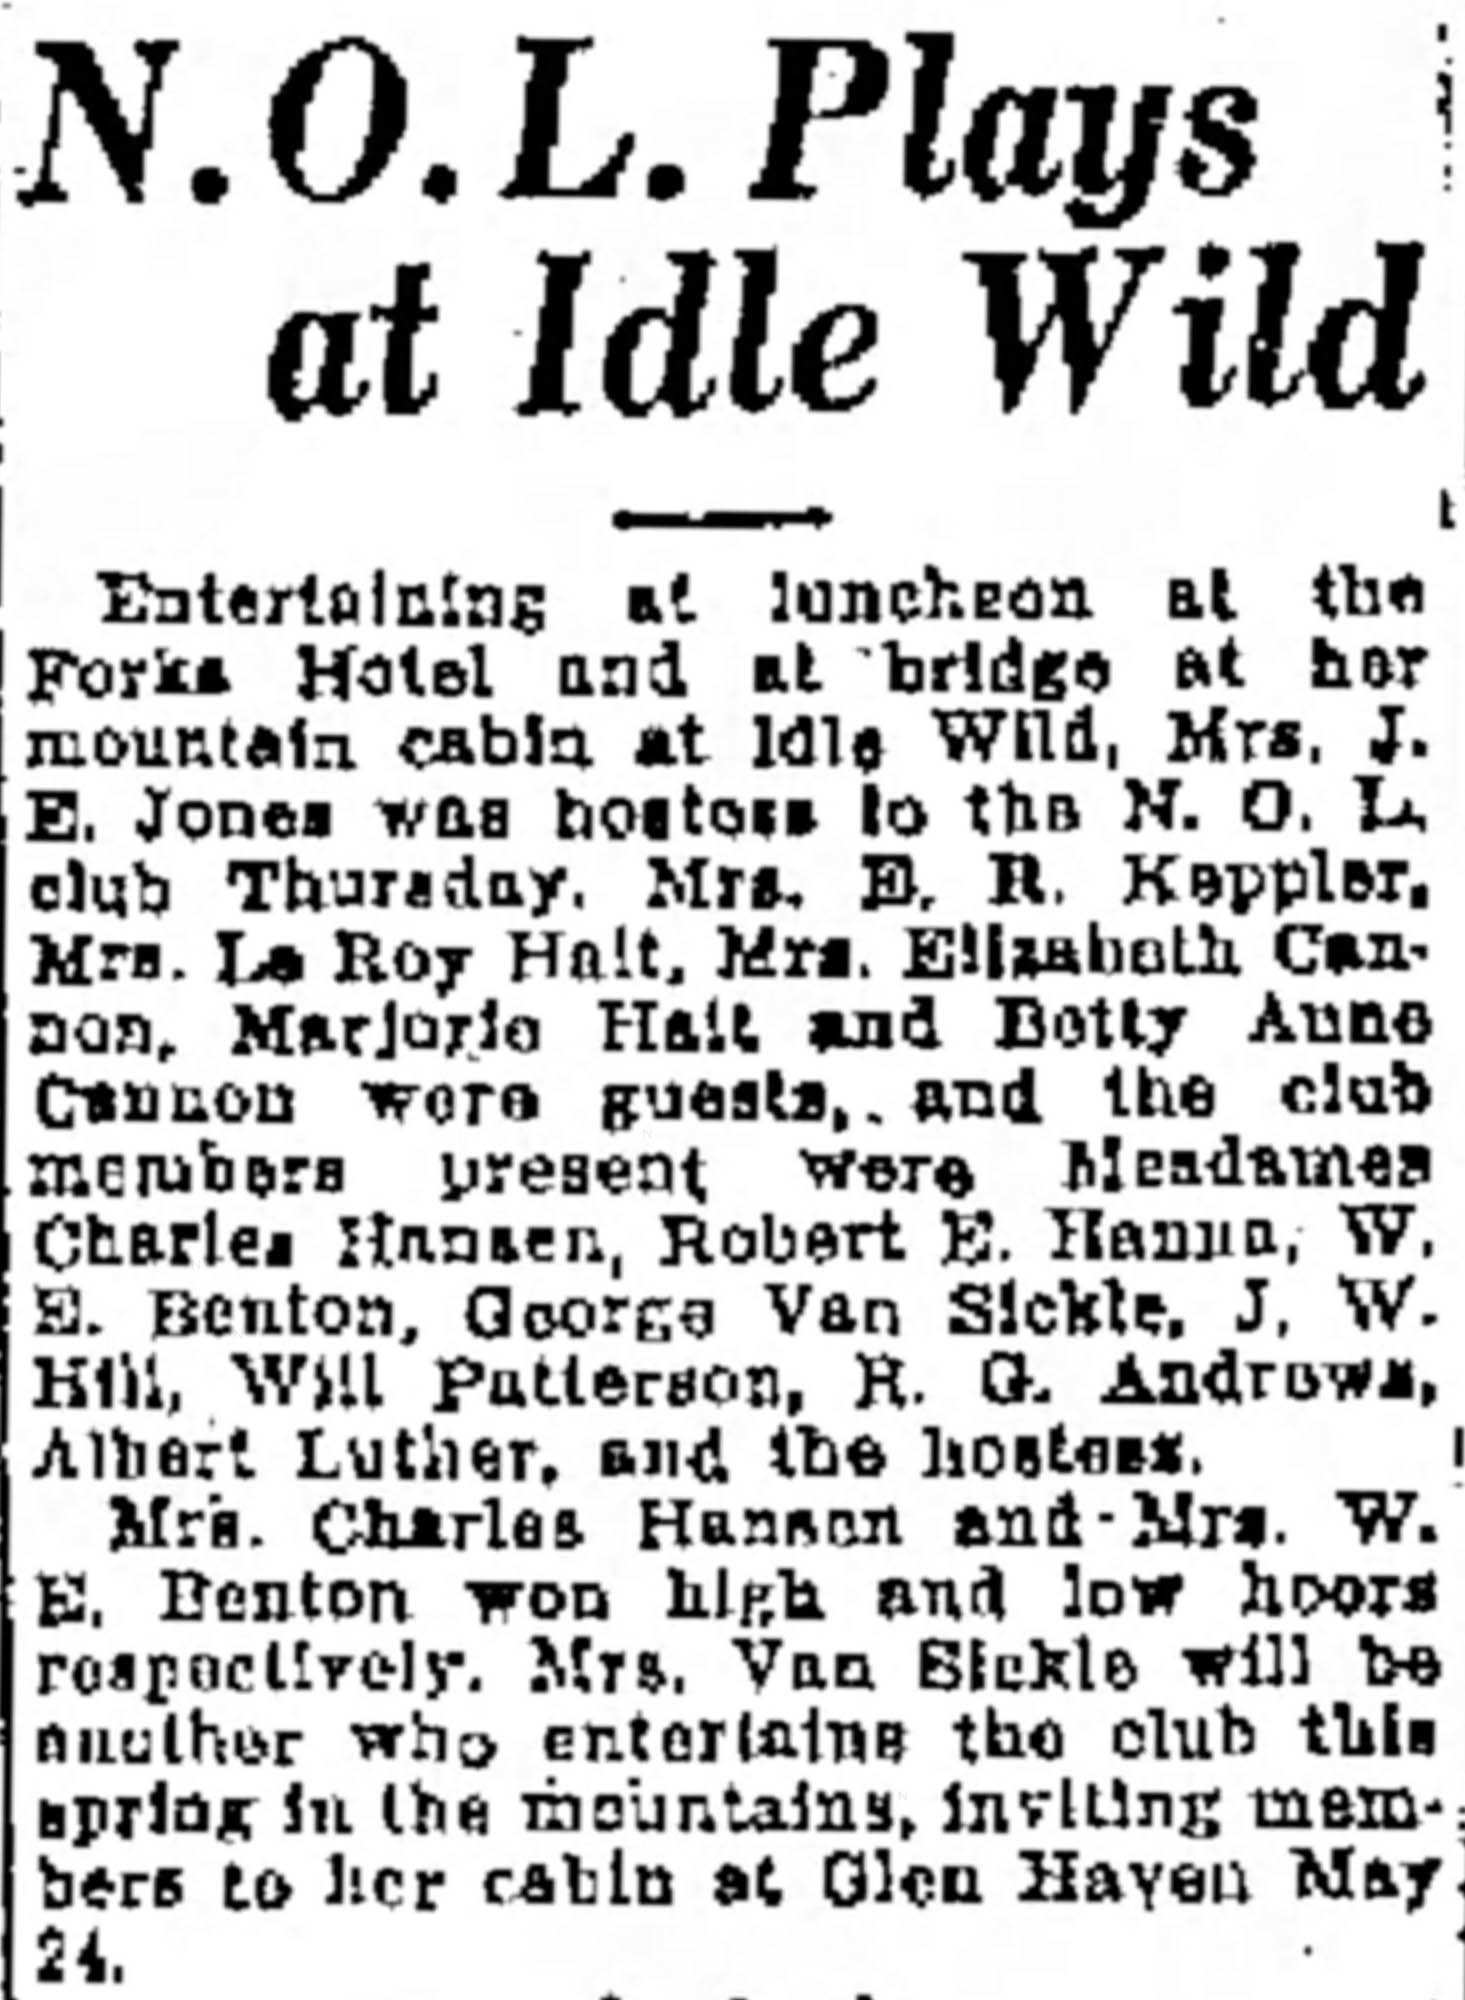 Idlewild Lodge - idlewildlodge.github.io - 1934-05-11 - Greeley Daily Tribune - Jones Family Host NOL Bridge Club At Idle Wild